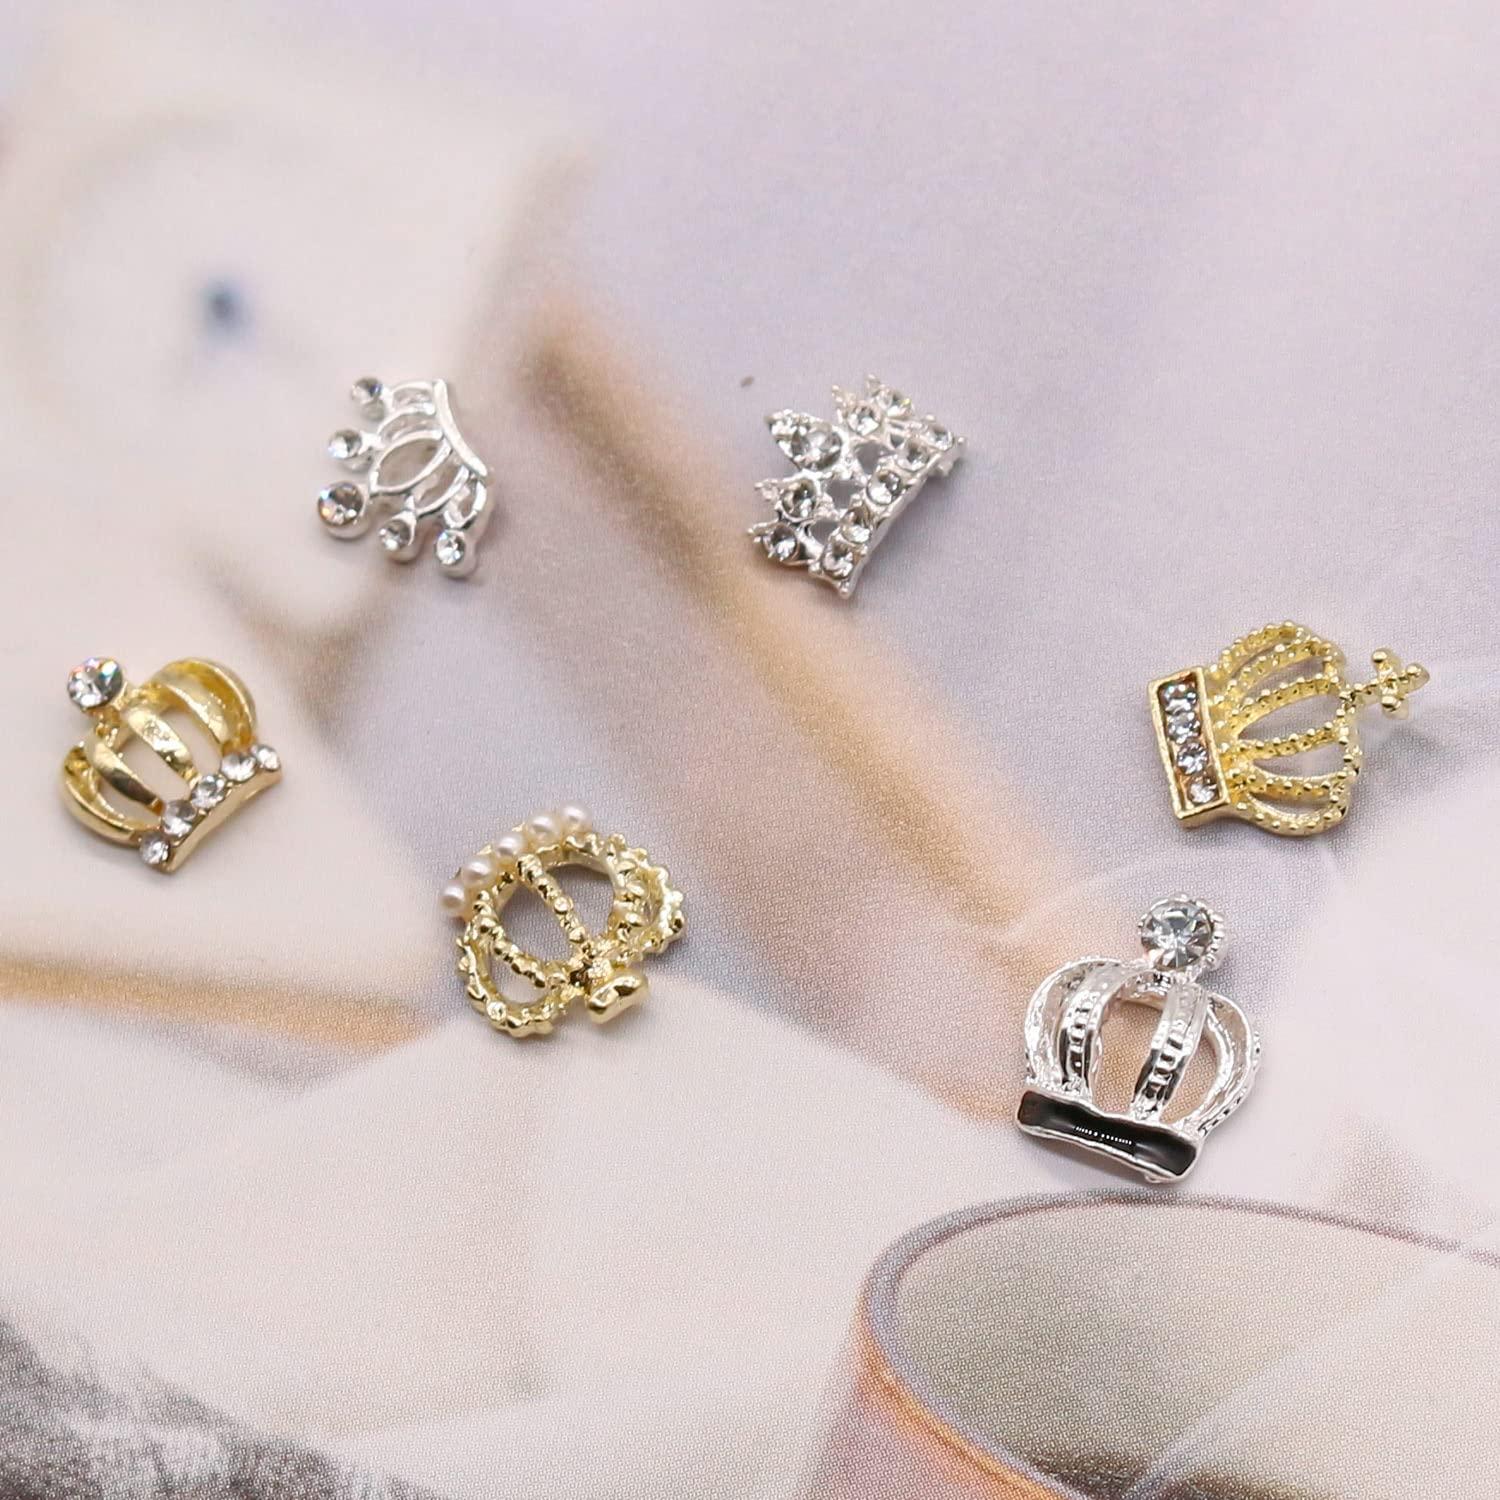 Diamond Princess charms !~ (3D Rhinestones for Nails, Nail Art Rhinest